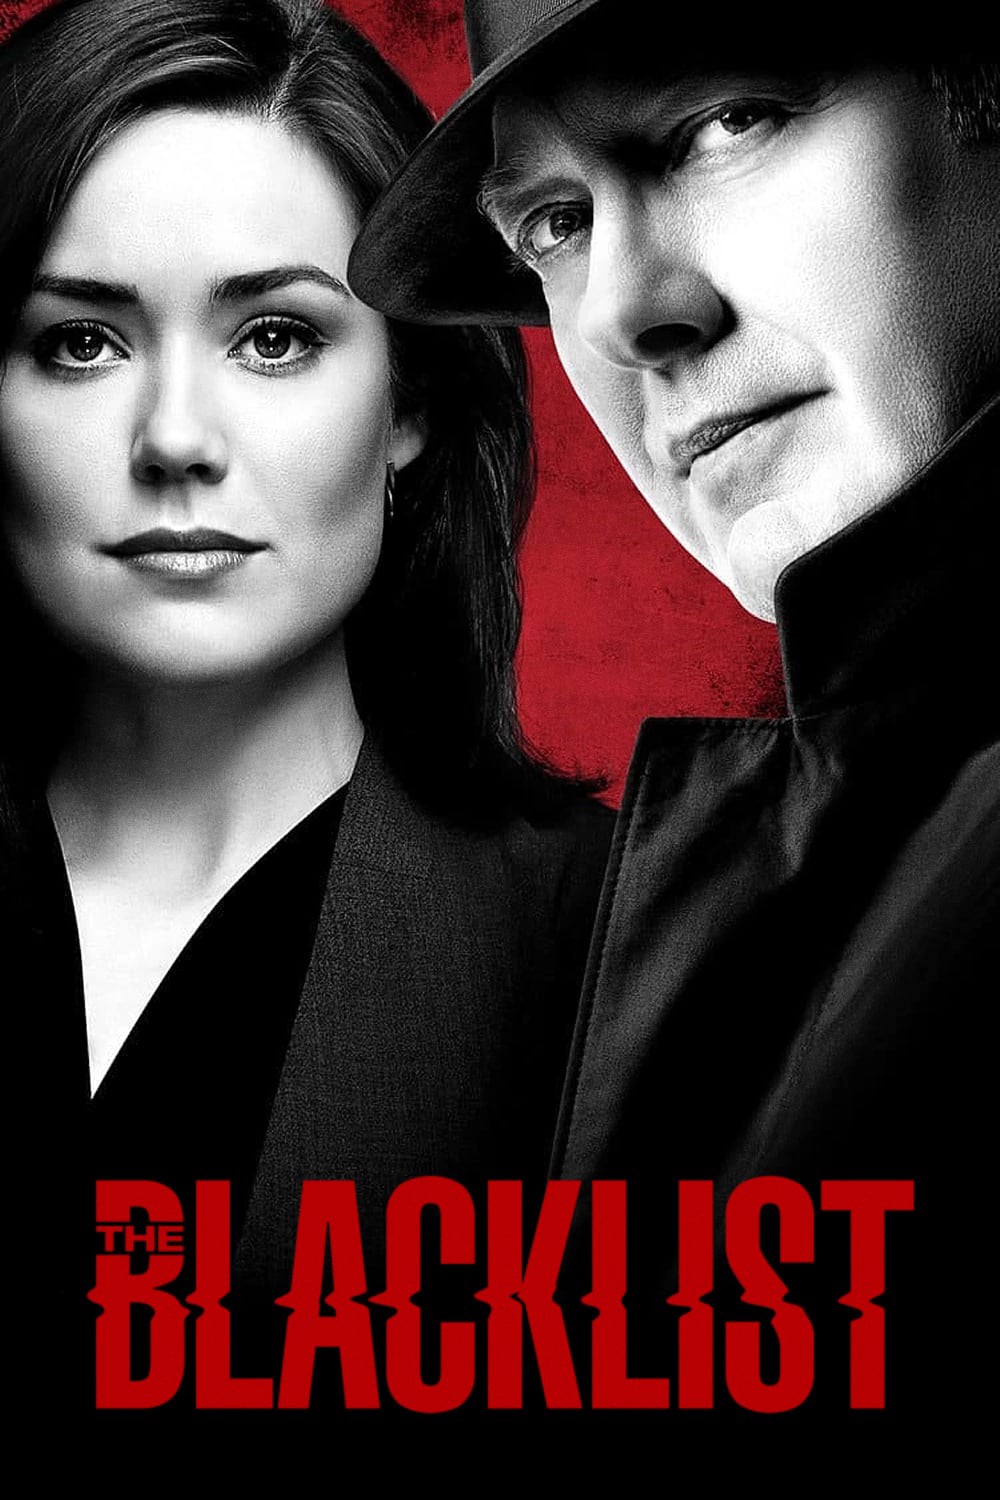 Serie The Blacklist